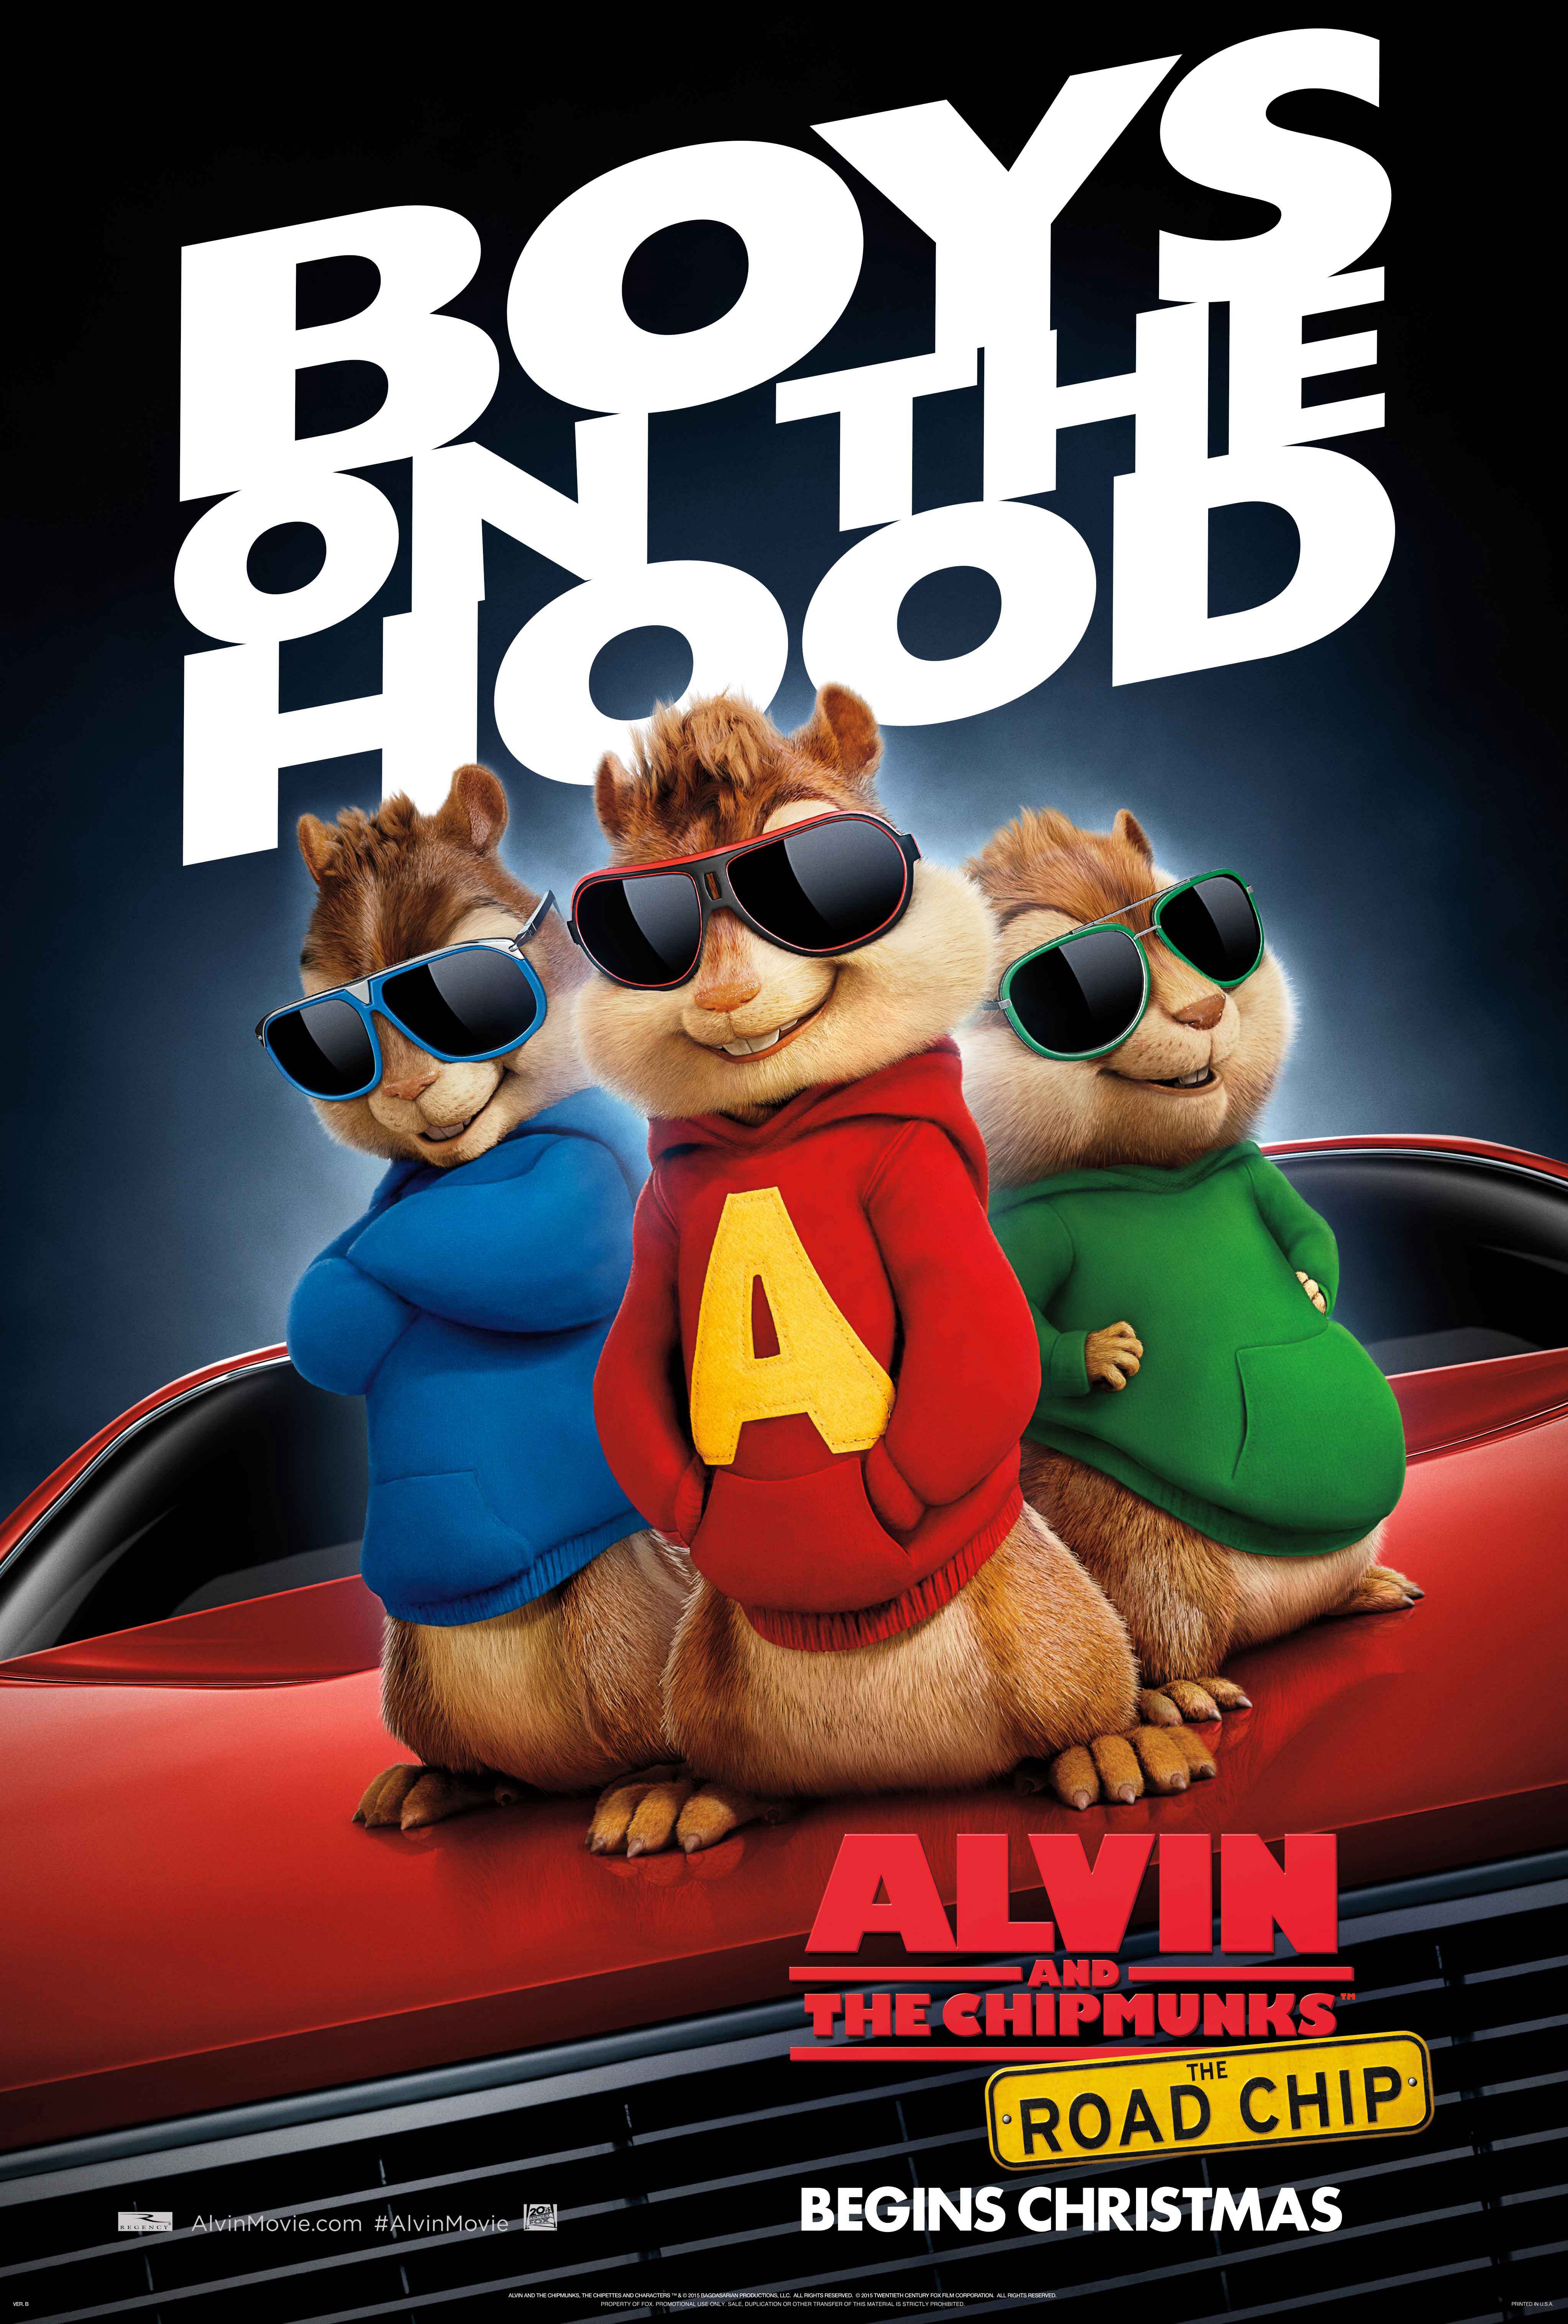 Poster Phim Alvin & The Chipmunks: Sóc chuột du hí (Alvin and the Chipmunks: The Road Chip)